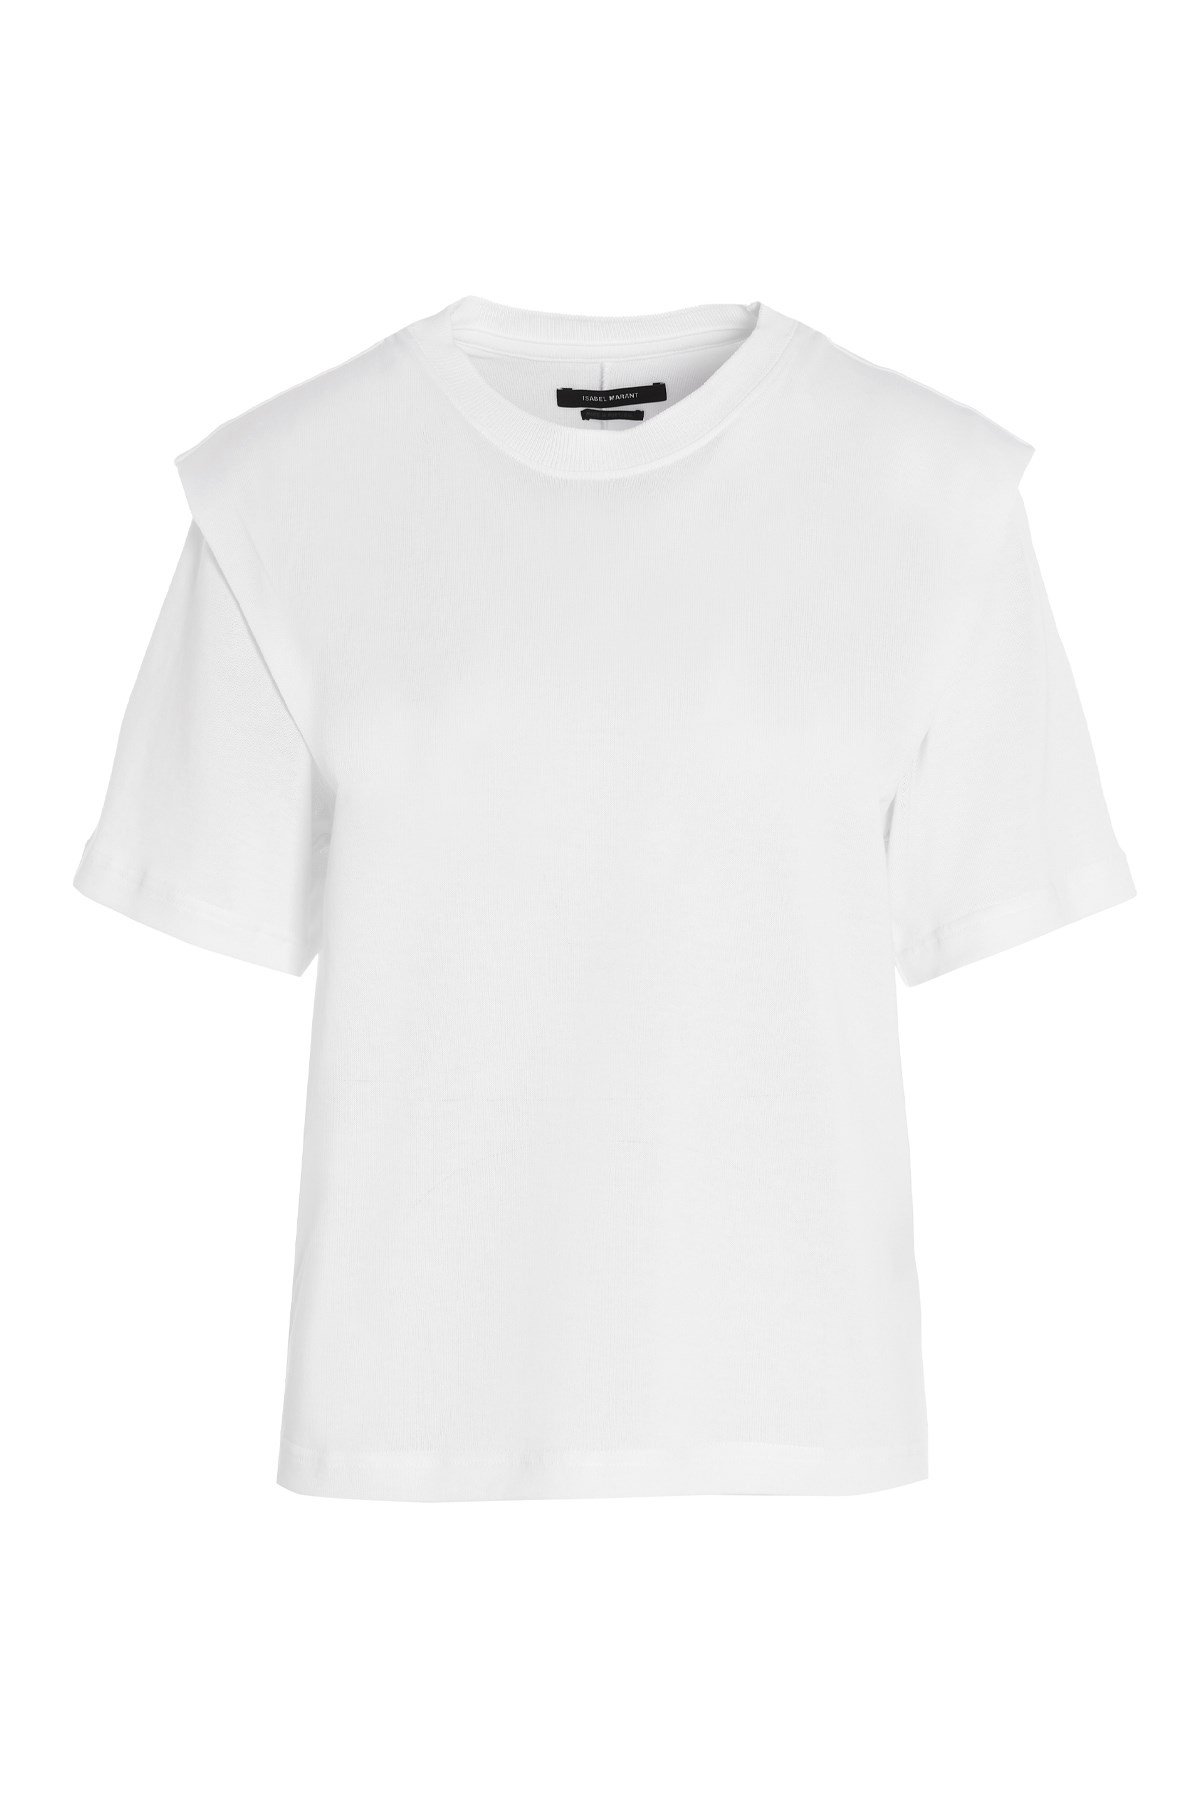 ISABEL MARANT ‘Zelitos’ T-Shirt